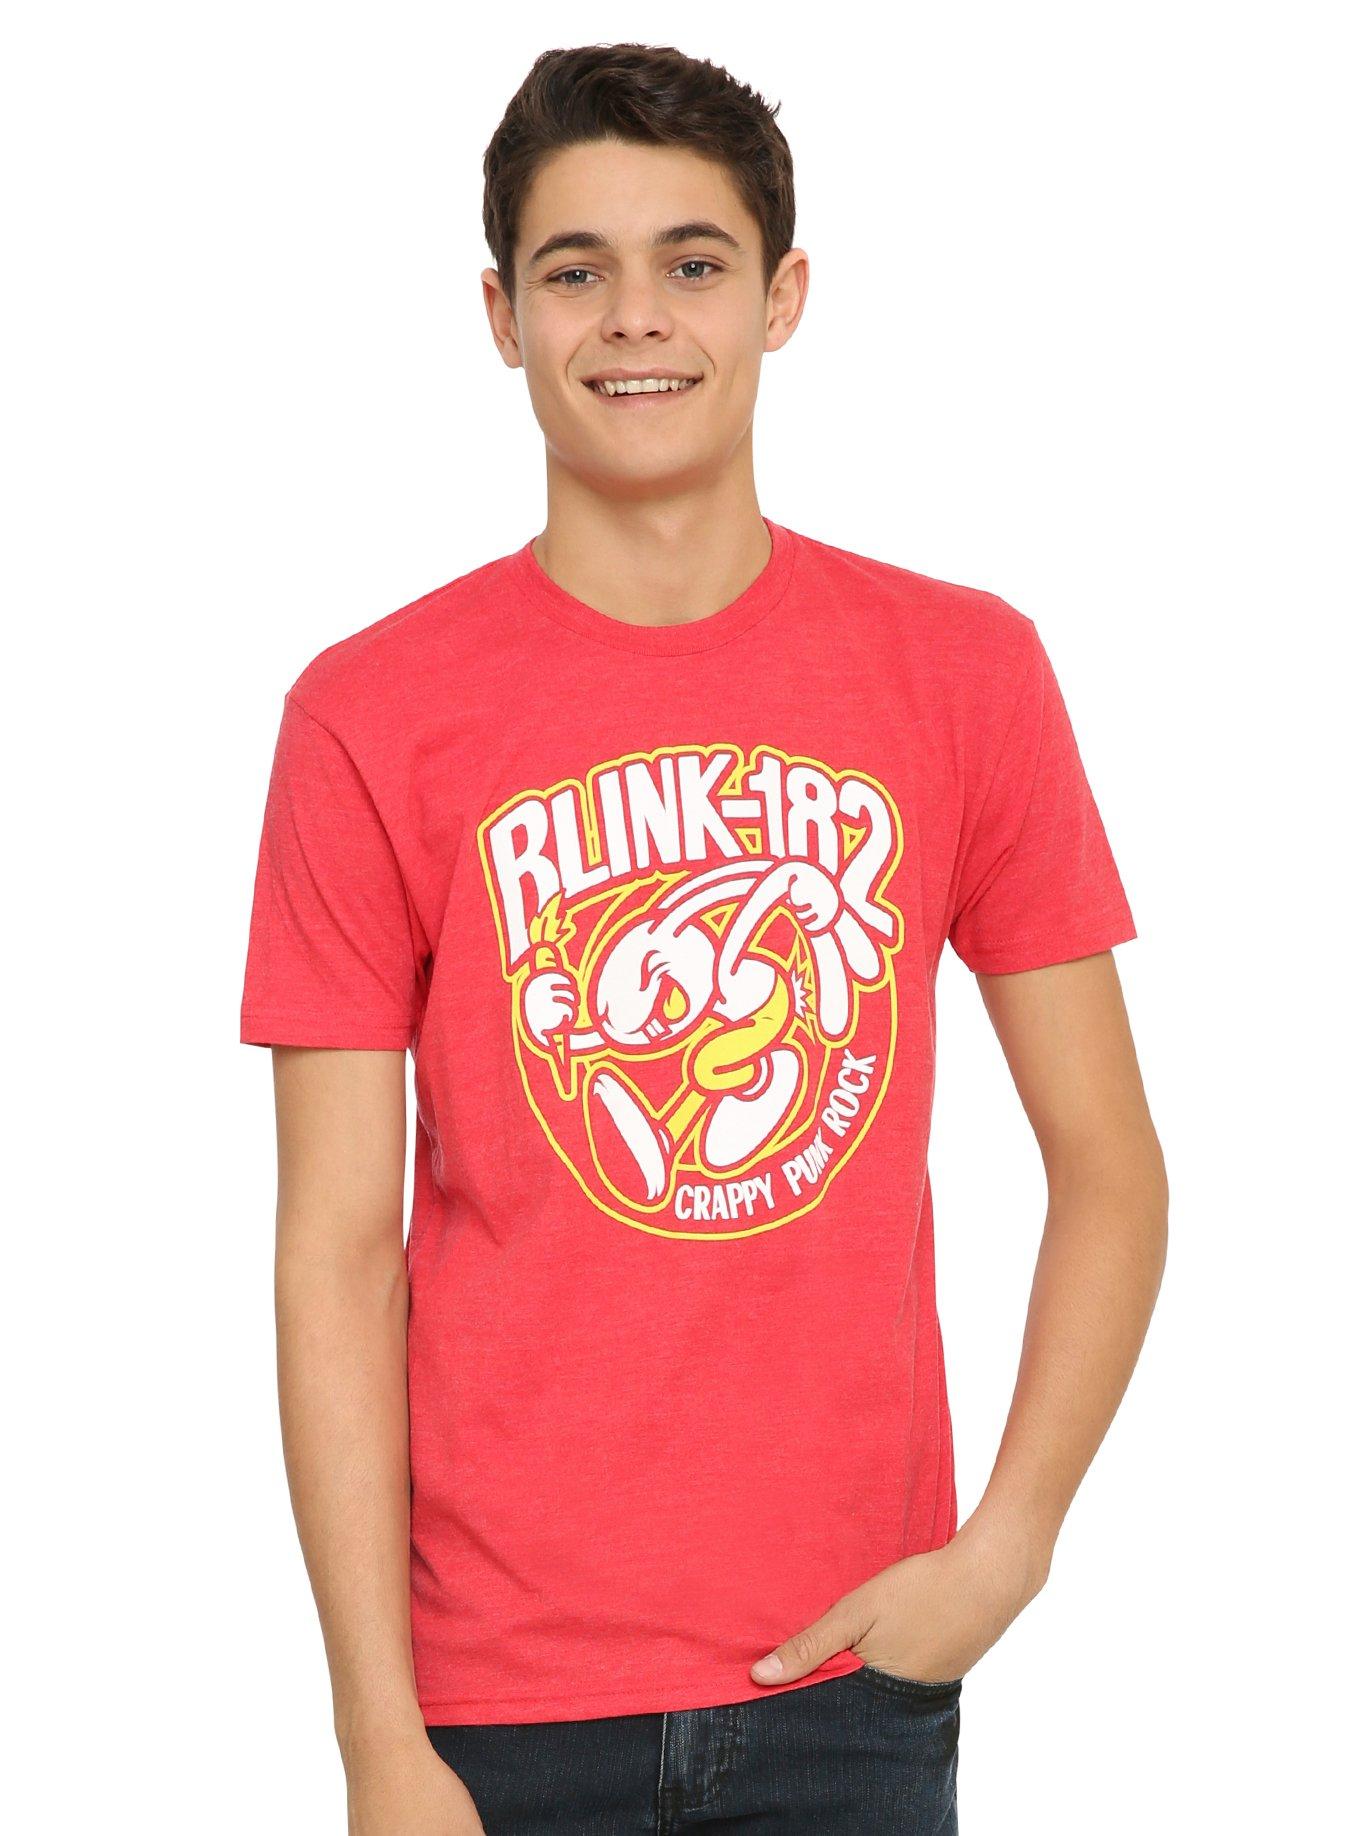 Blink-182 Crappy Punk Rock T-Shirt, RED, hi-res